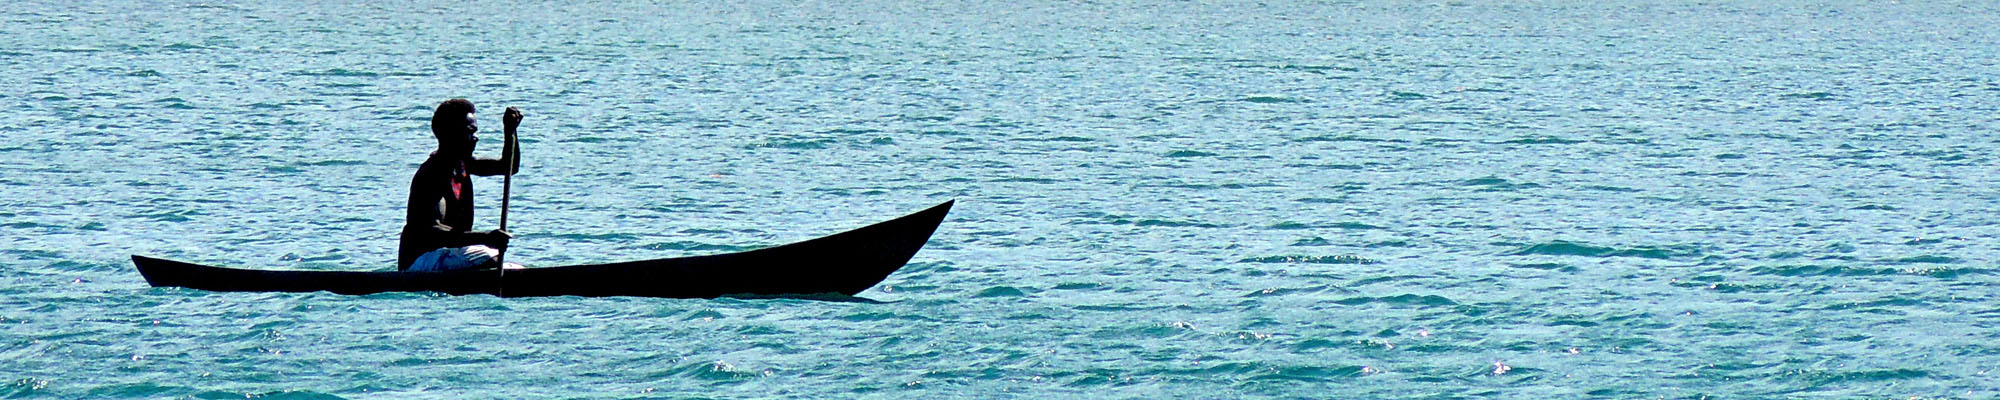 man paddles canoe in ocean